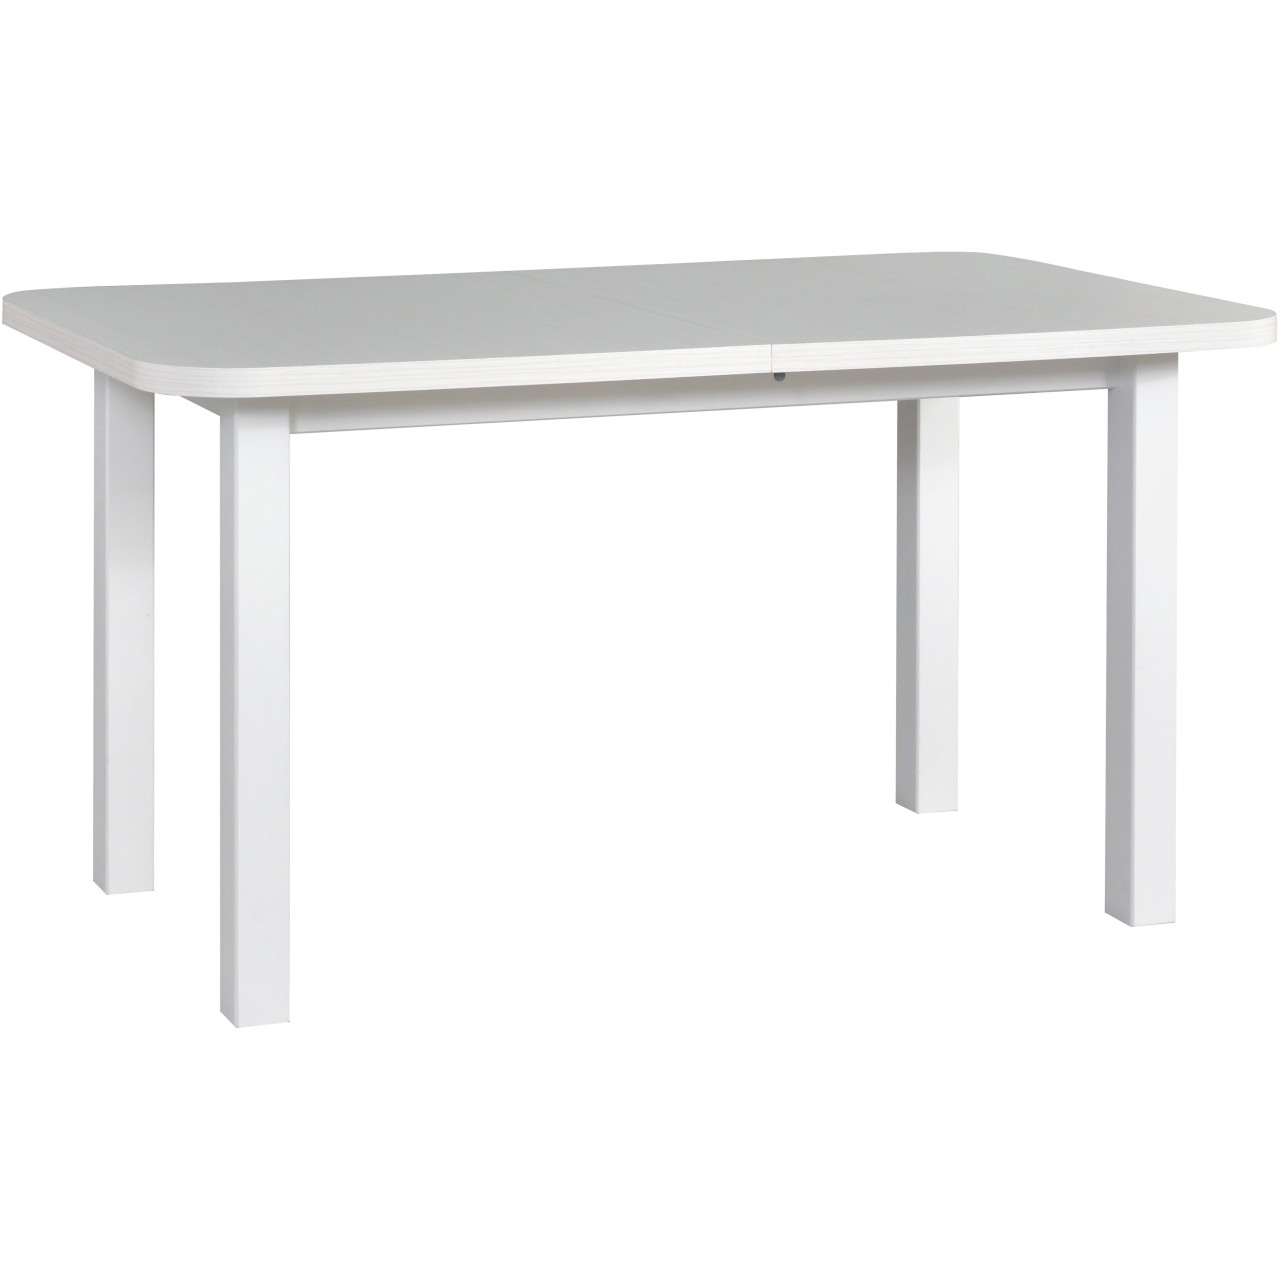 Table WENUS 2 80x140/180 white laminate